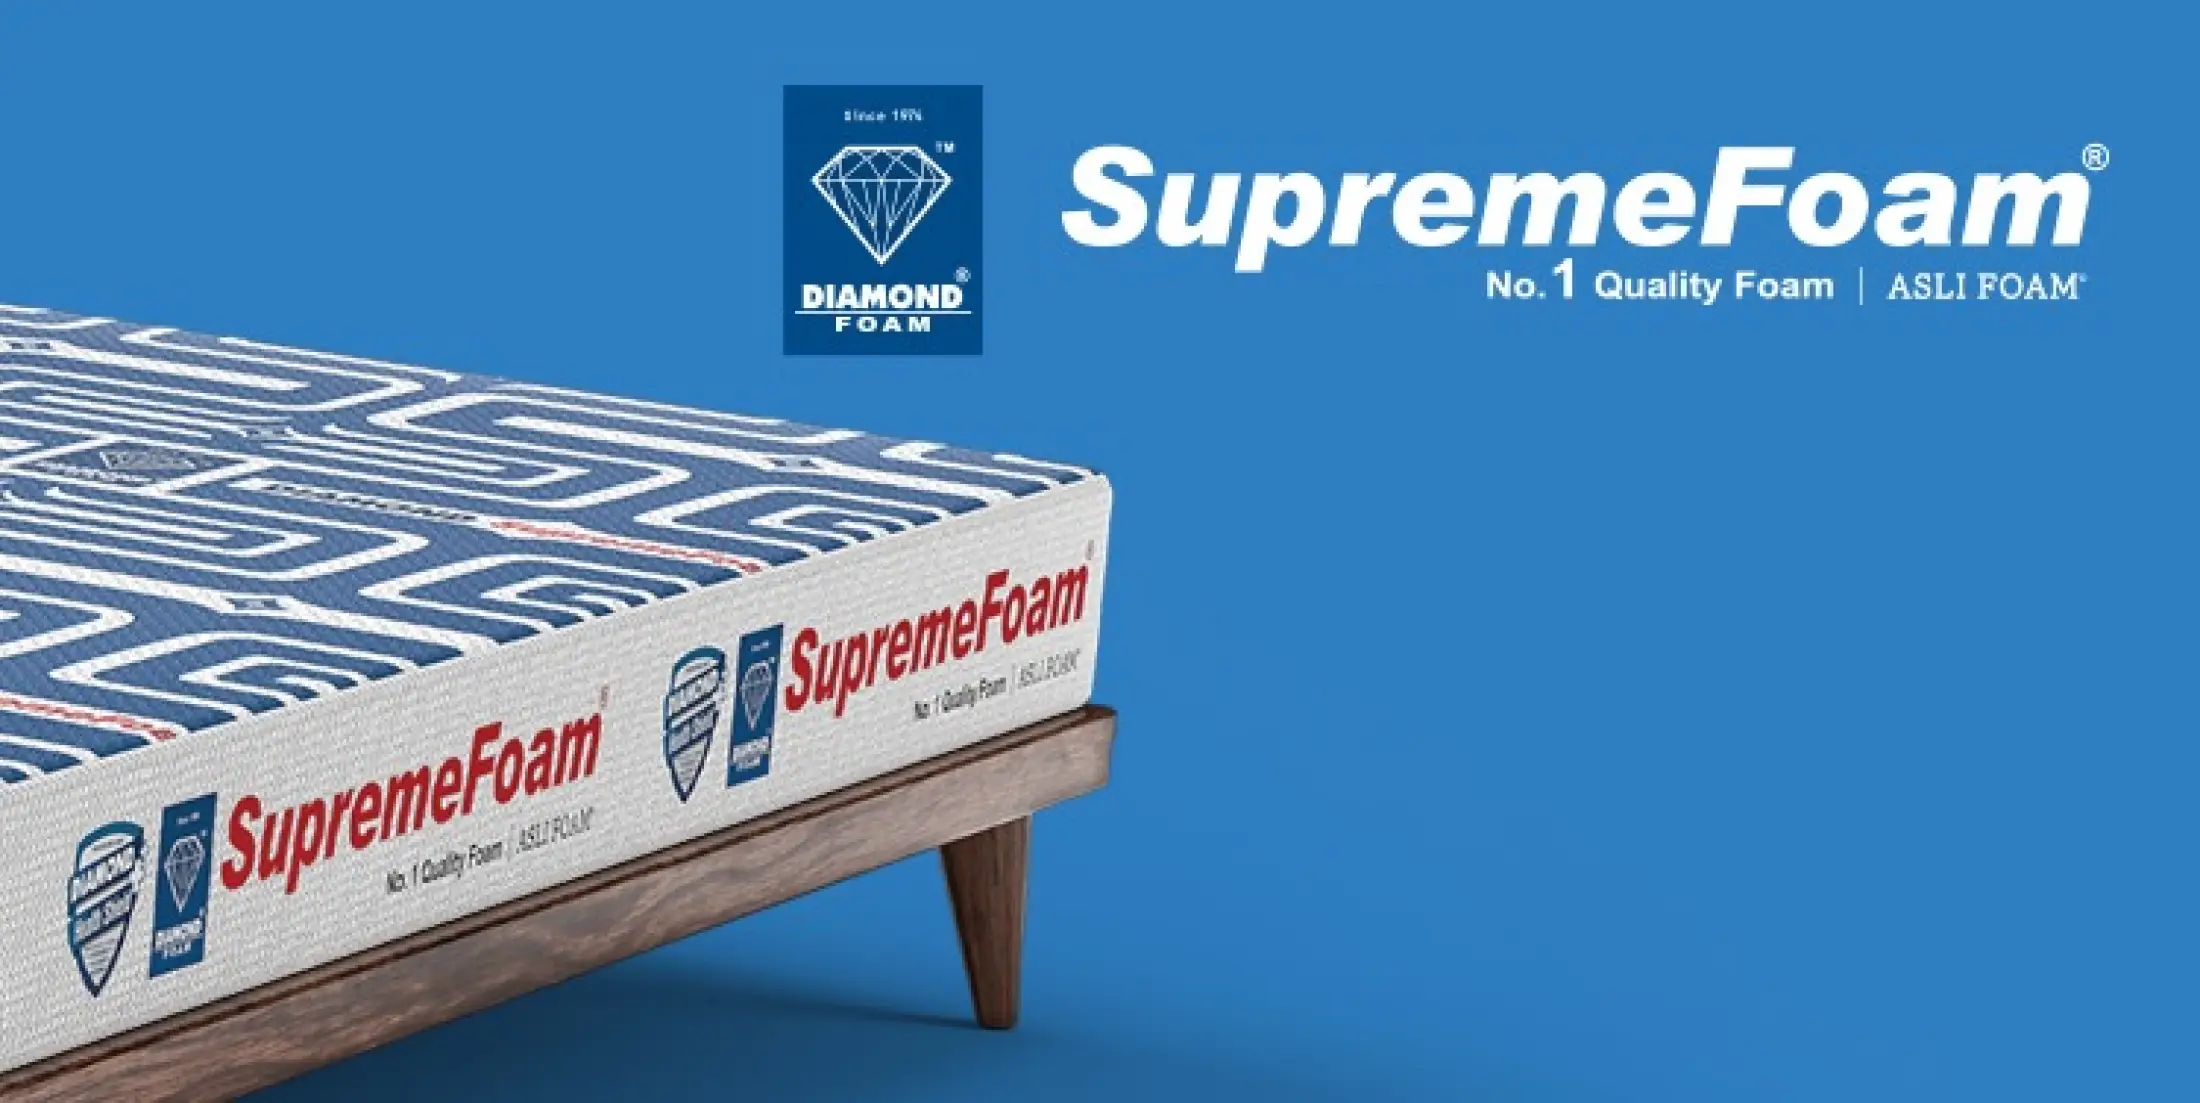 Supreme Soft Foam - Latest Diamond Supreme Foam in Pakistan